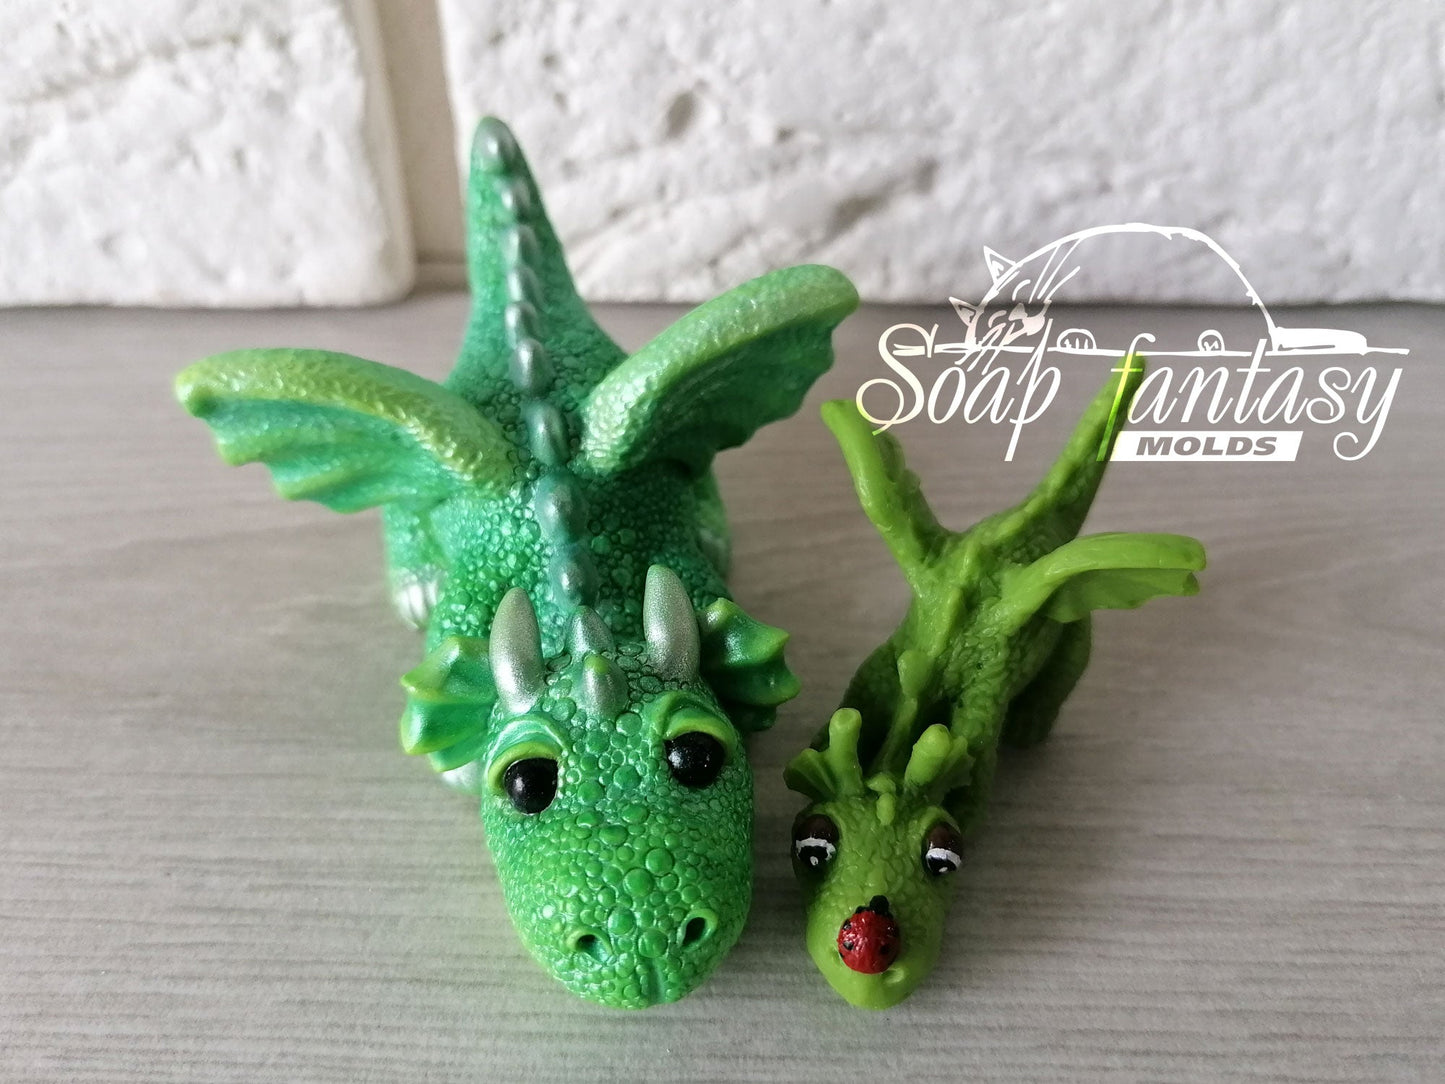 GARAGE SALE >> Emerald dragon silicone mold for soap making